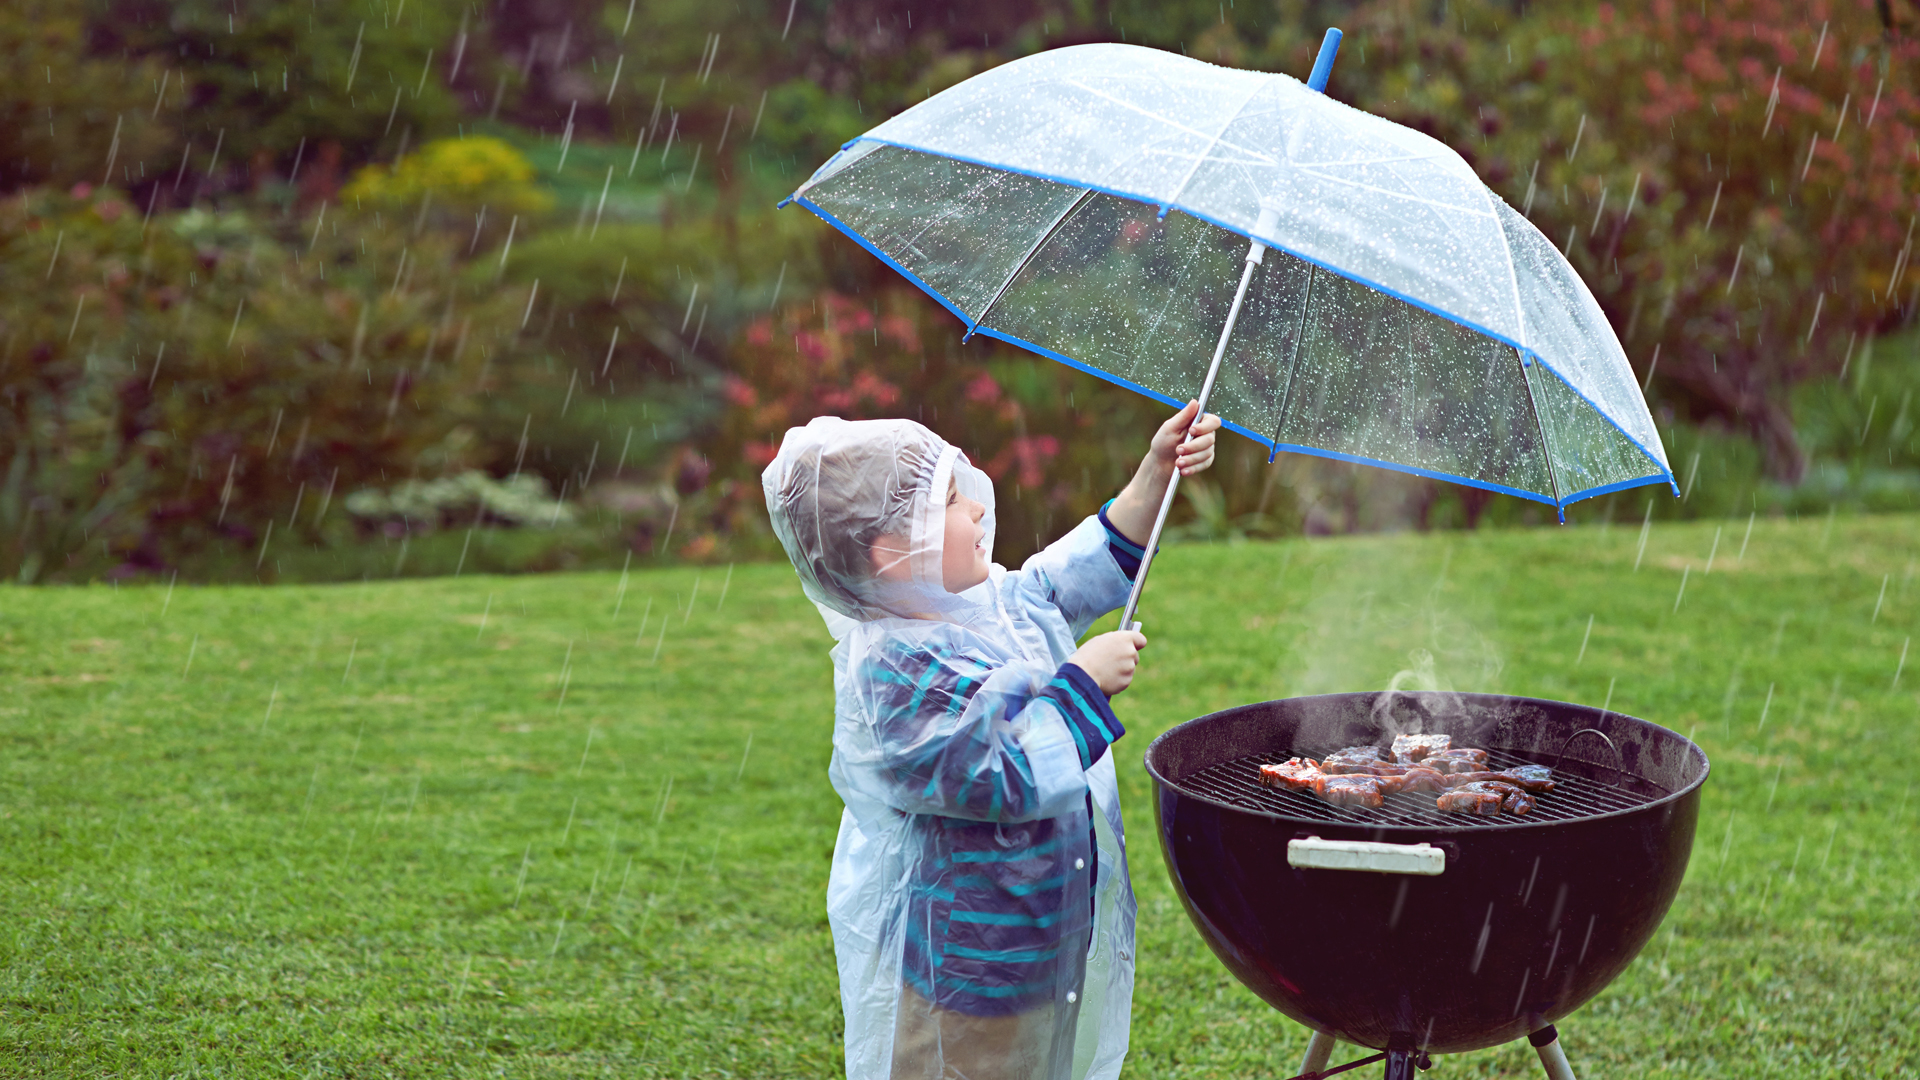 Child holding an umbrella at a BBQ